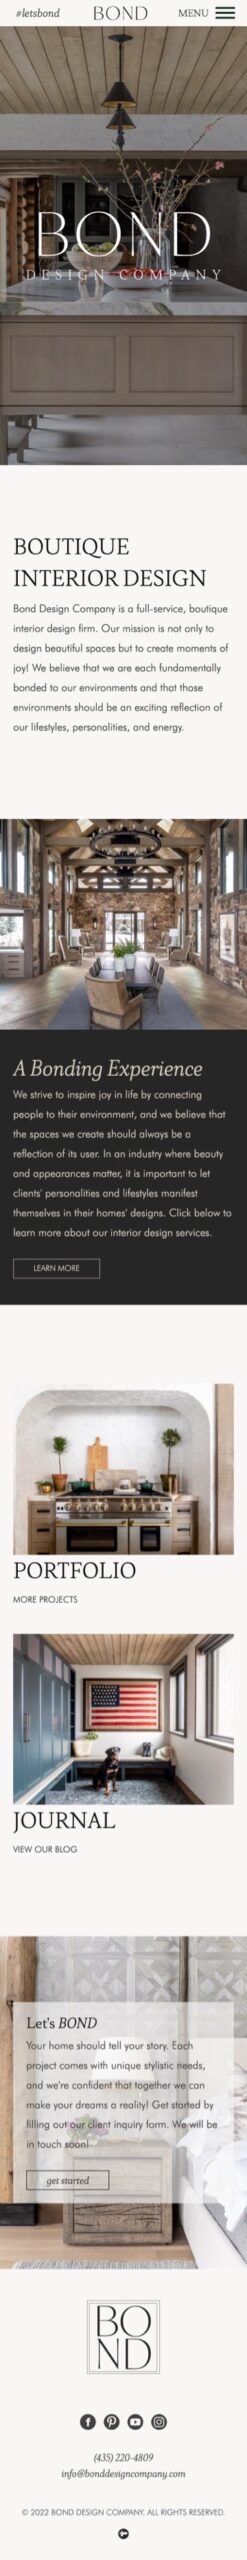 Bond Design Company, Website Design,Mobile Concept